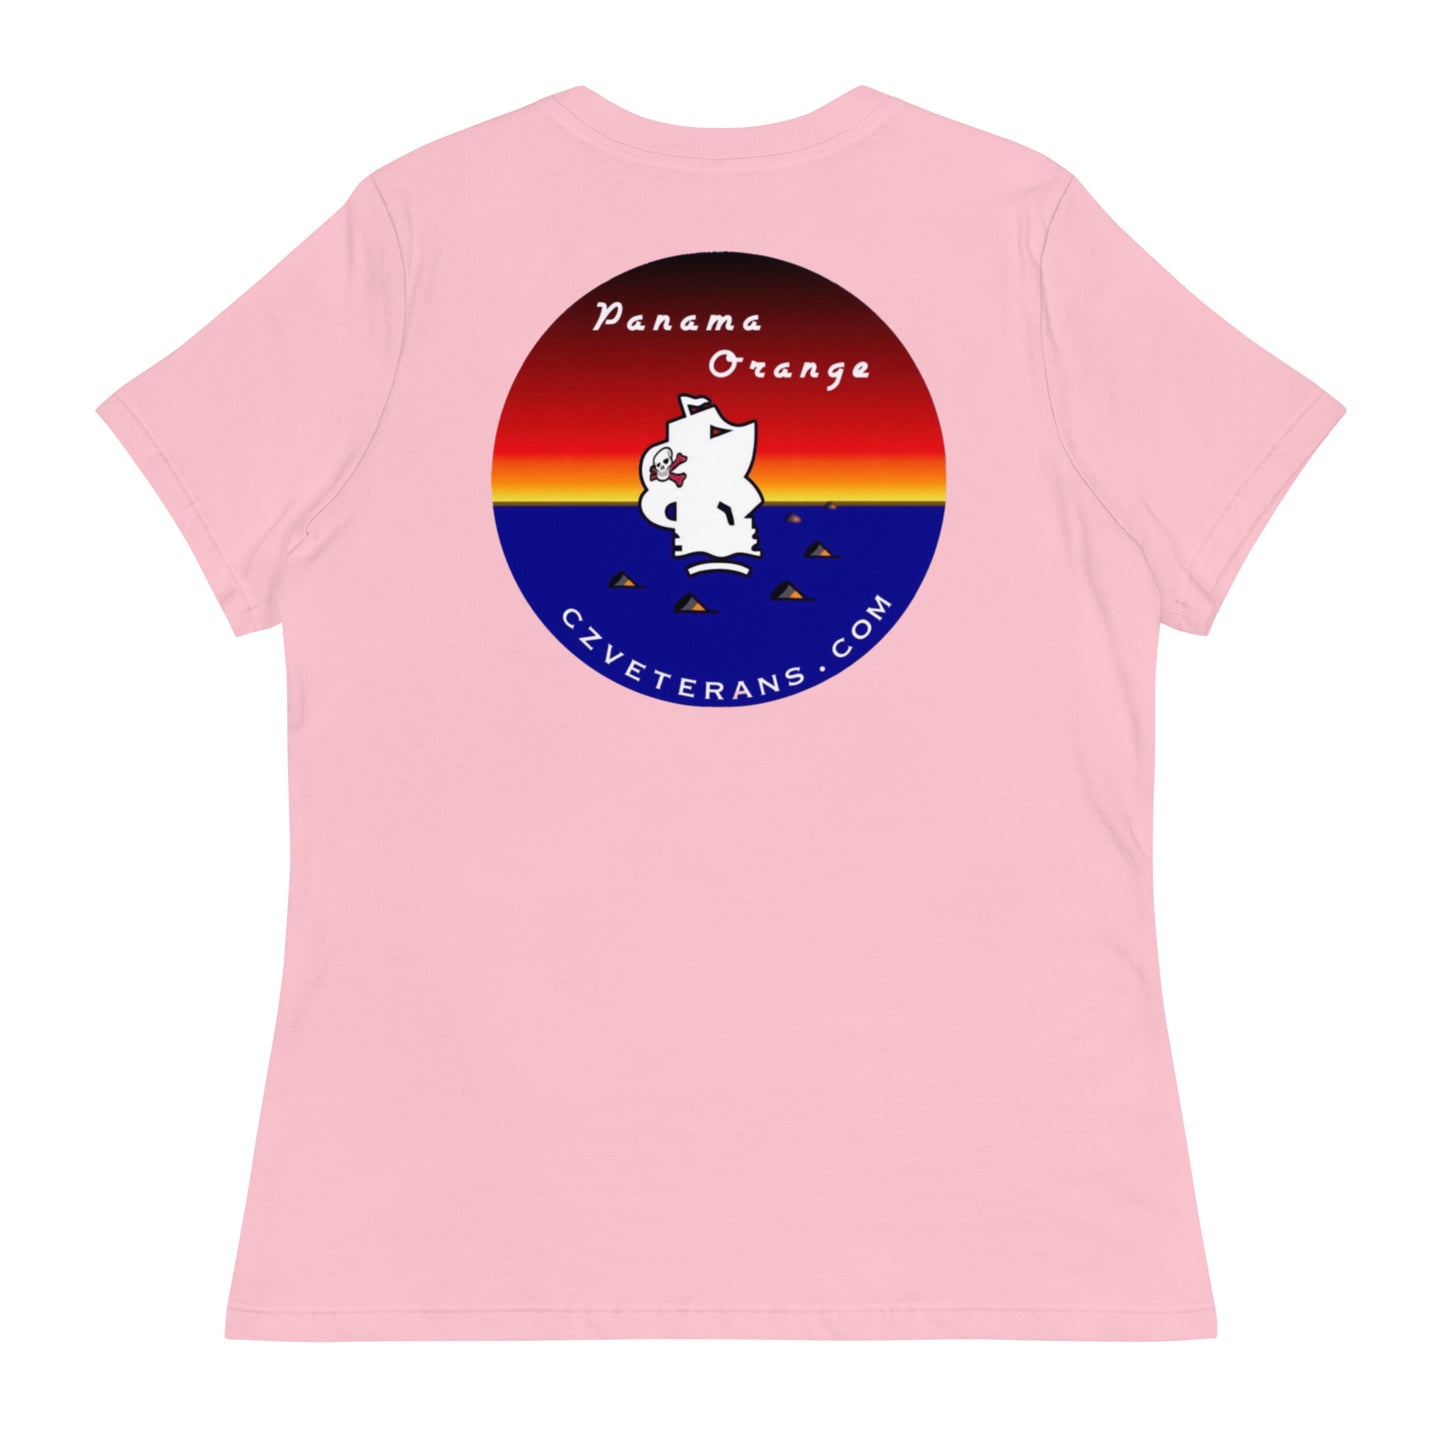 Panama Canal Zone Veterans- Women's Relaxed T-Shirt